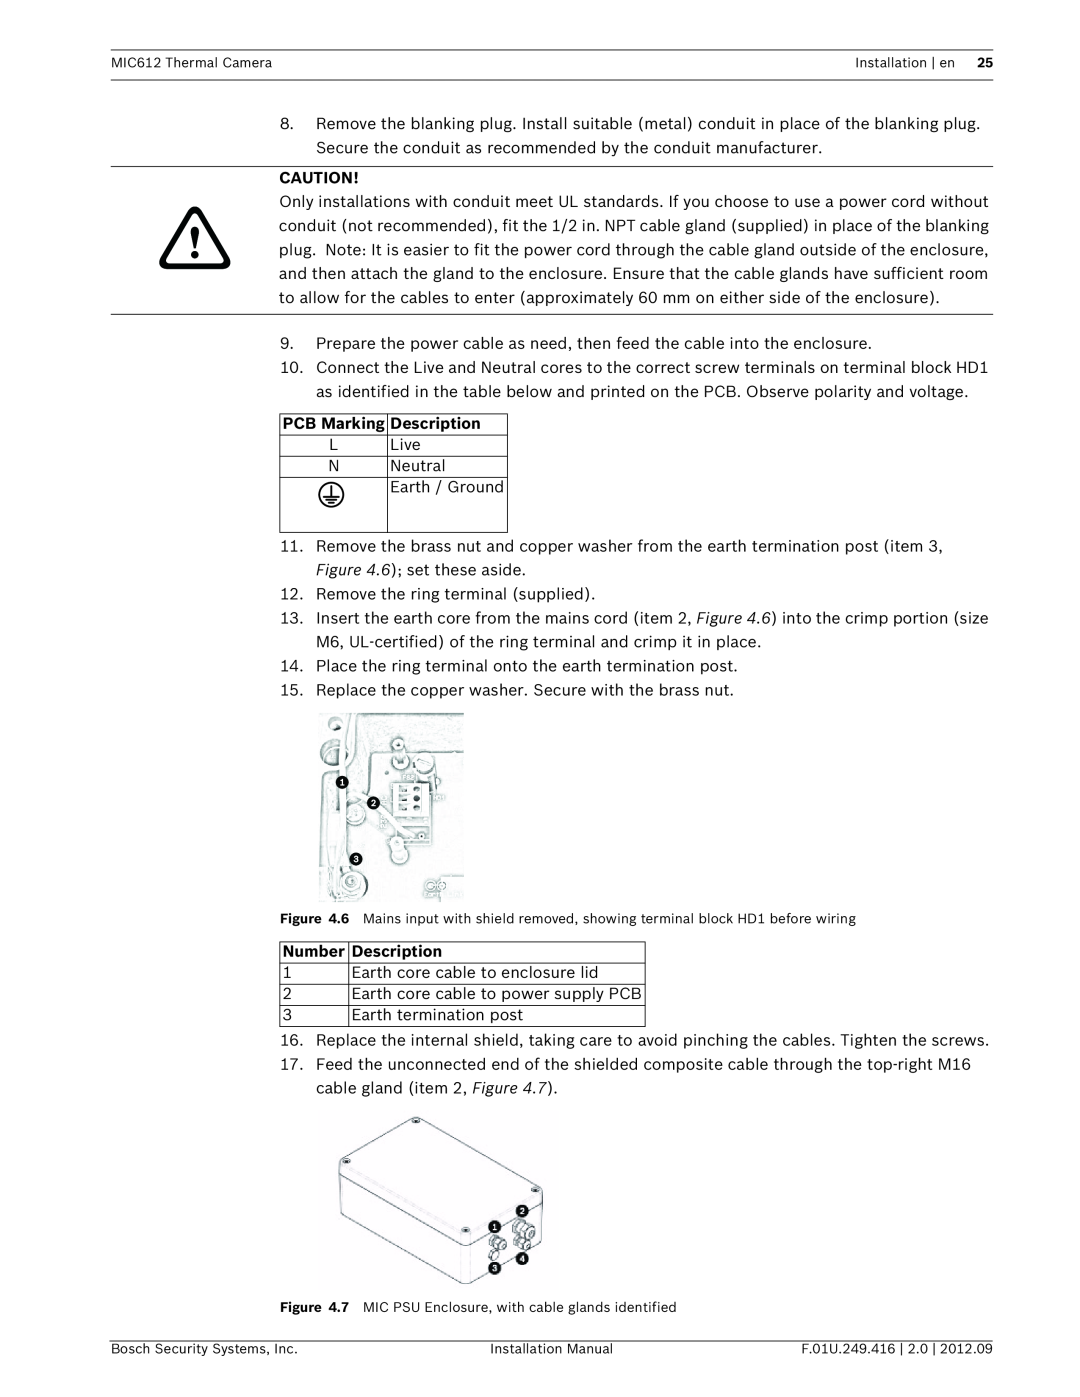 Bosch Appliances MIC612 installation manual PCB Marking Description, Number Description 